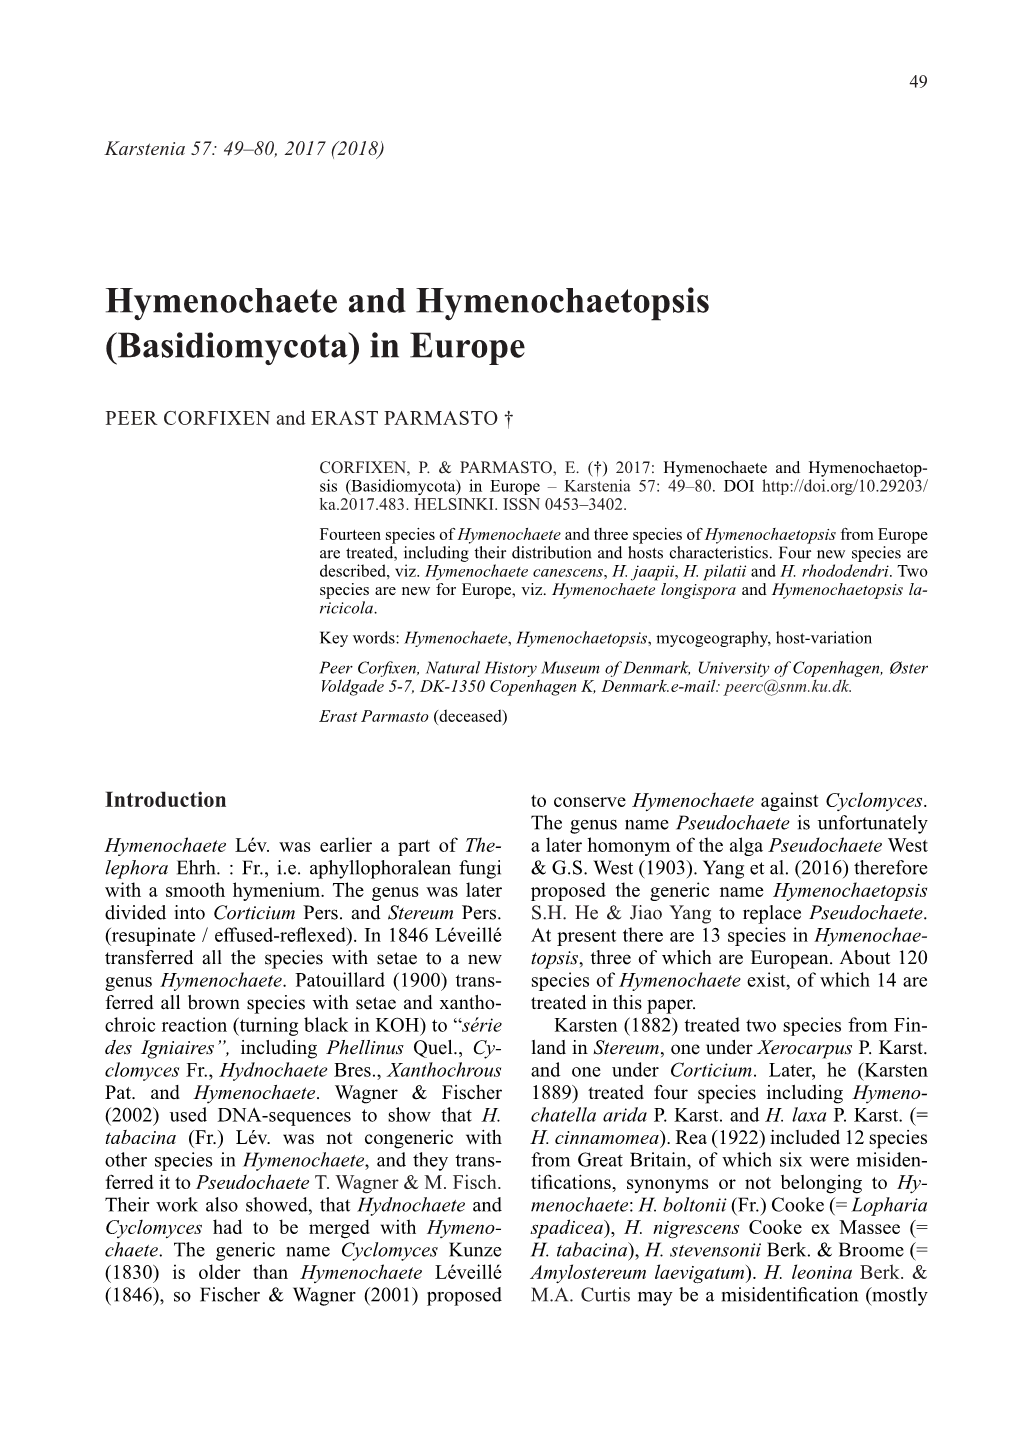 Hymenochaete and Hymenochaetopsis (Basidiomycota) in Europe